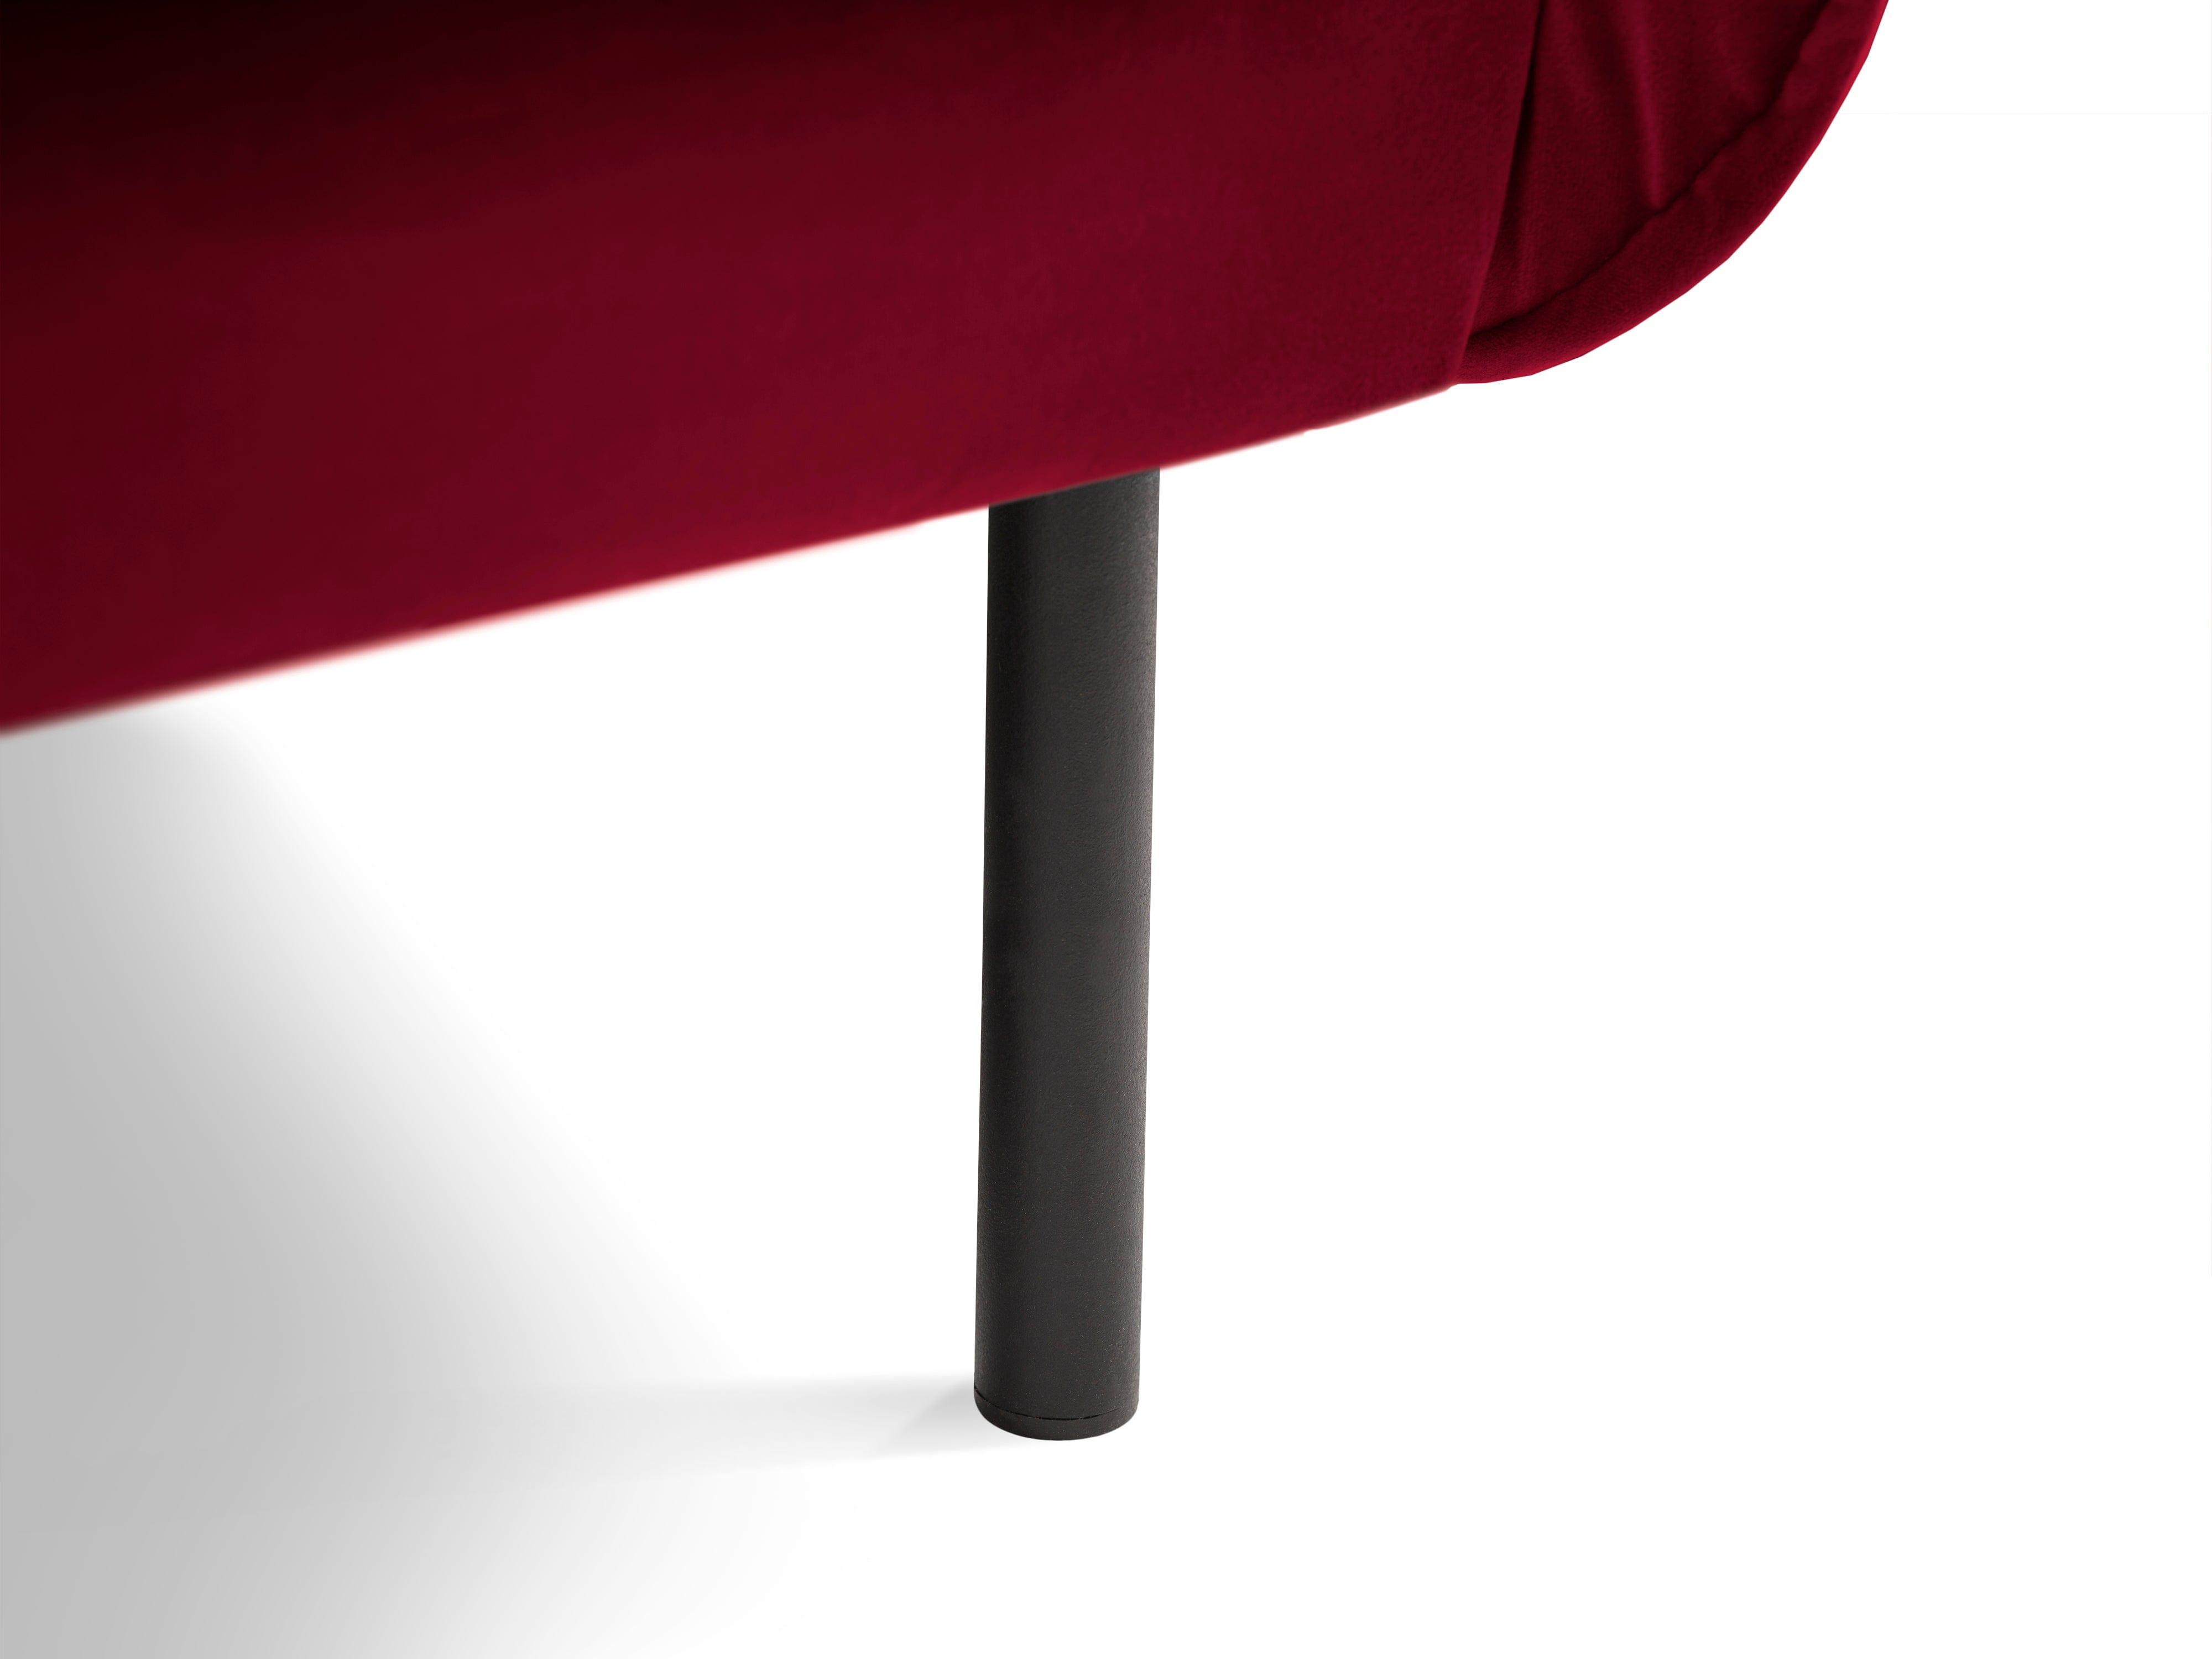 Velvet 3-seater sofa VIENNA maroon with black base